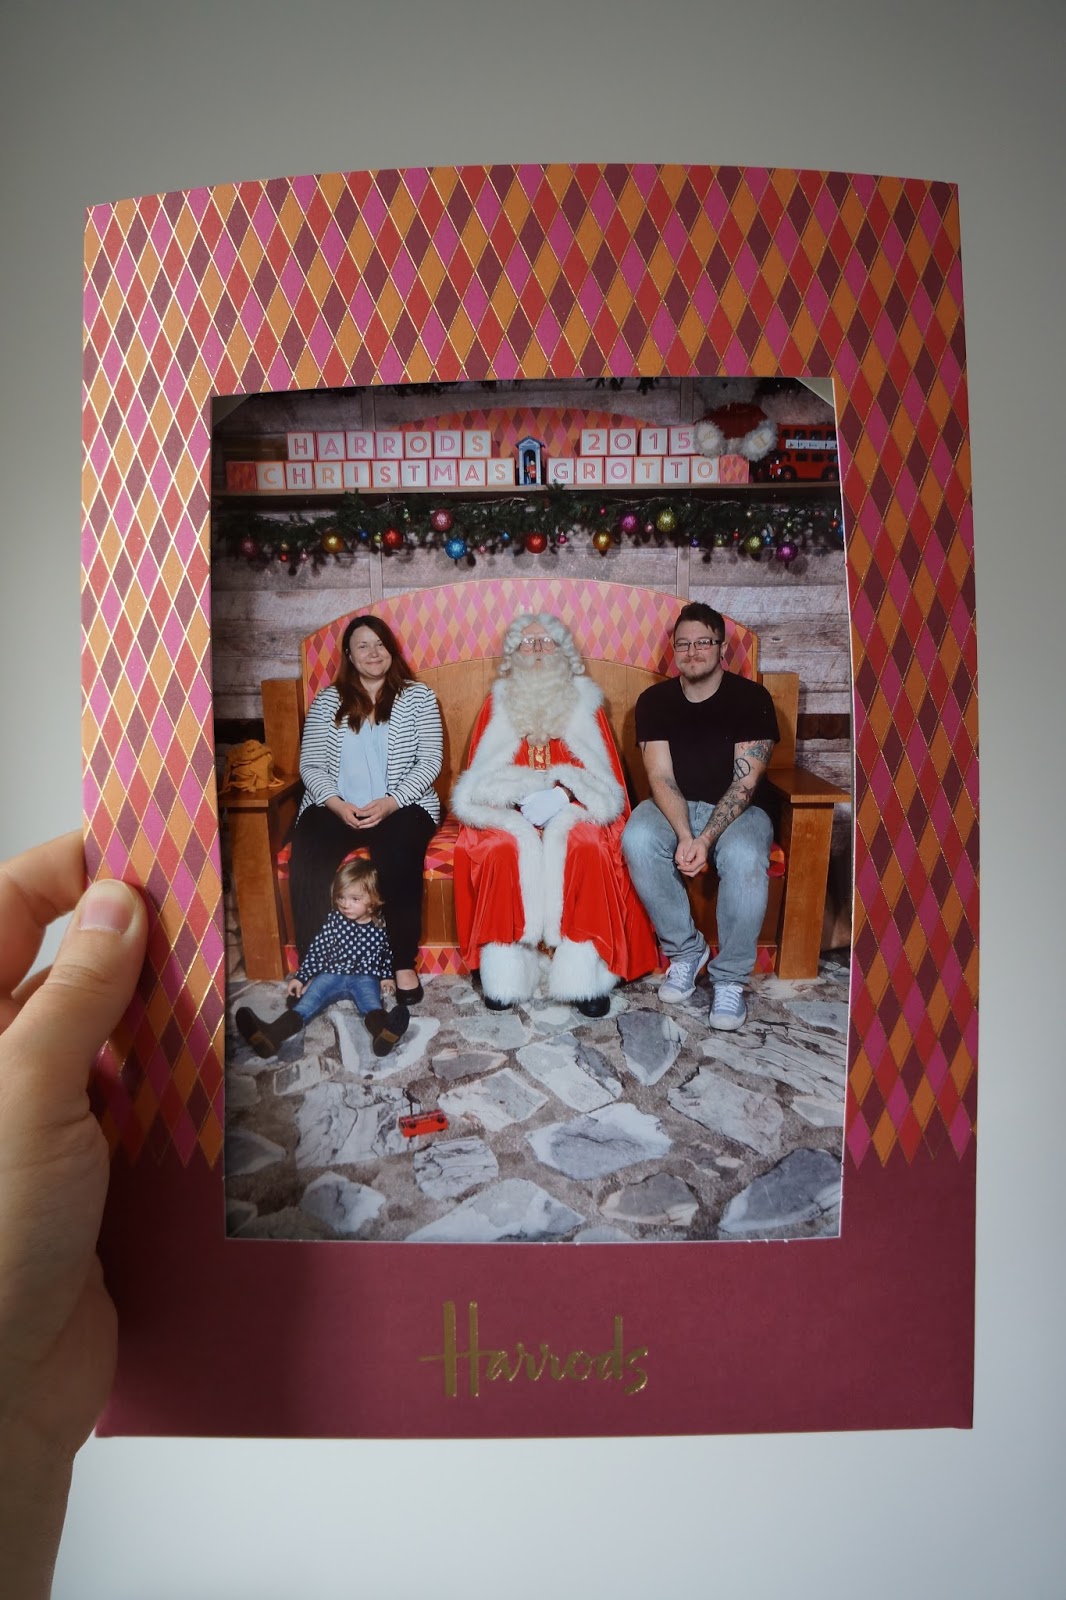 harrods christmas grotto 2015 toddler tantrum funny santa family picture